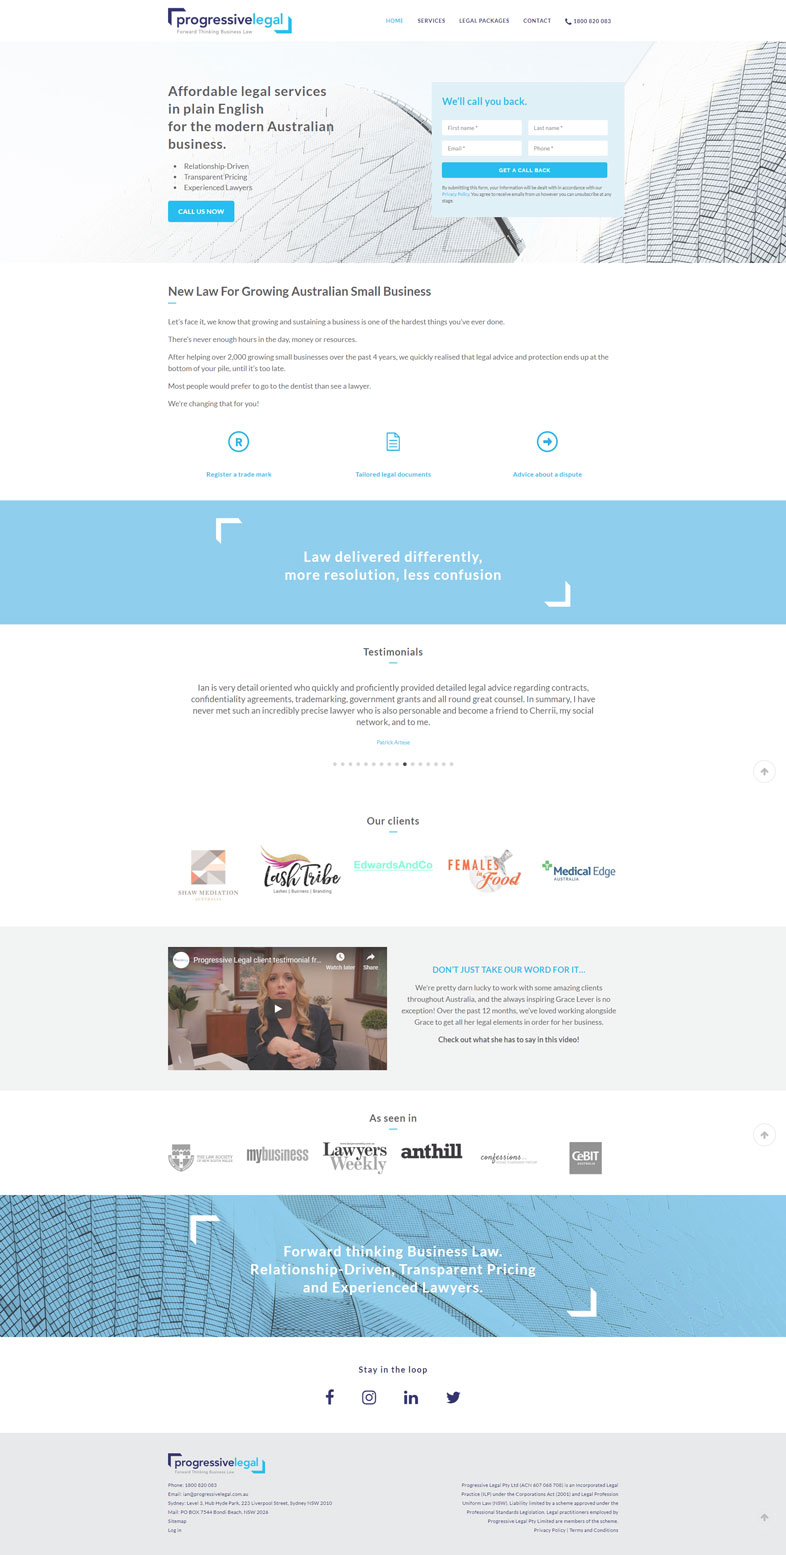 Progressive legal's website design of the homepage